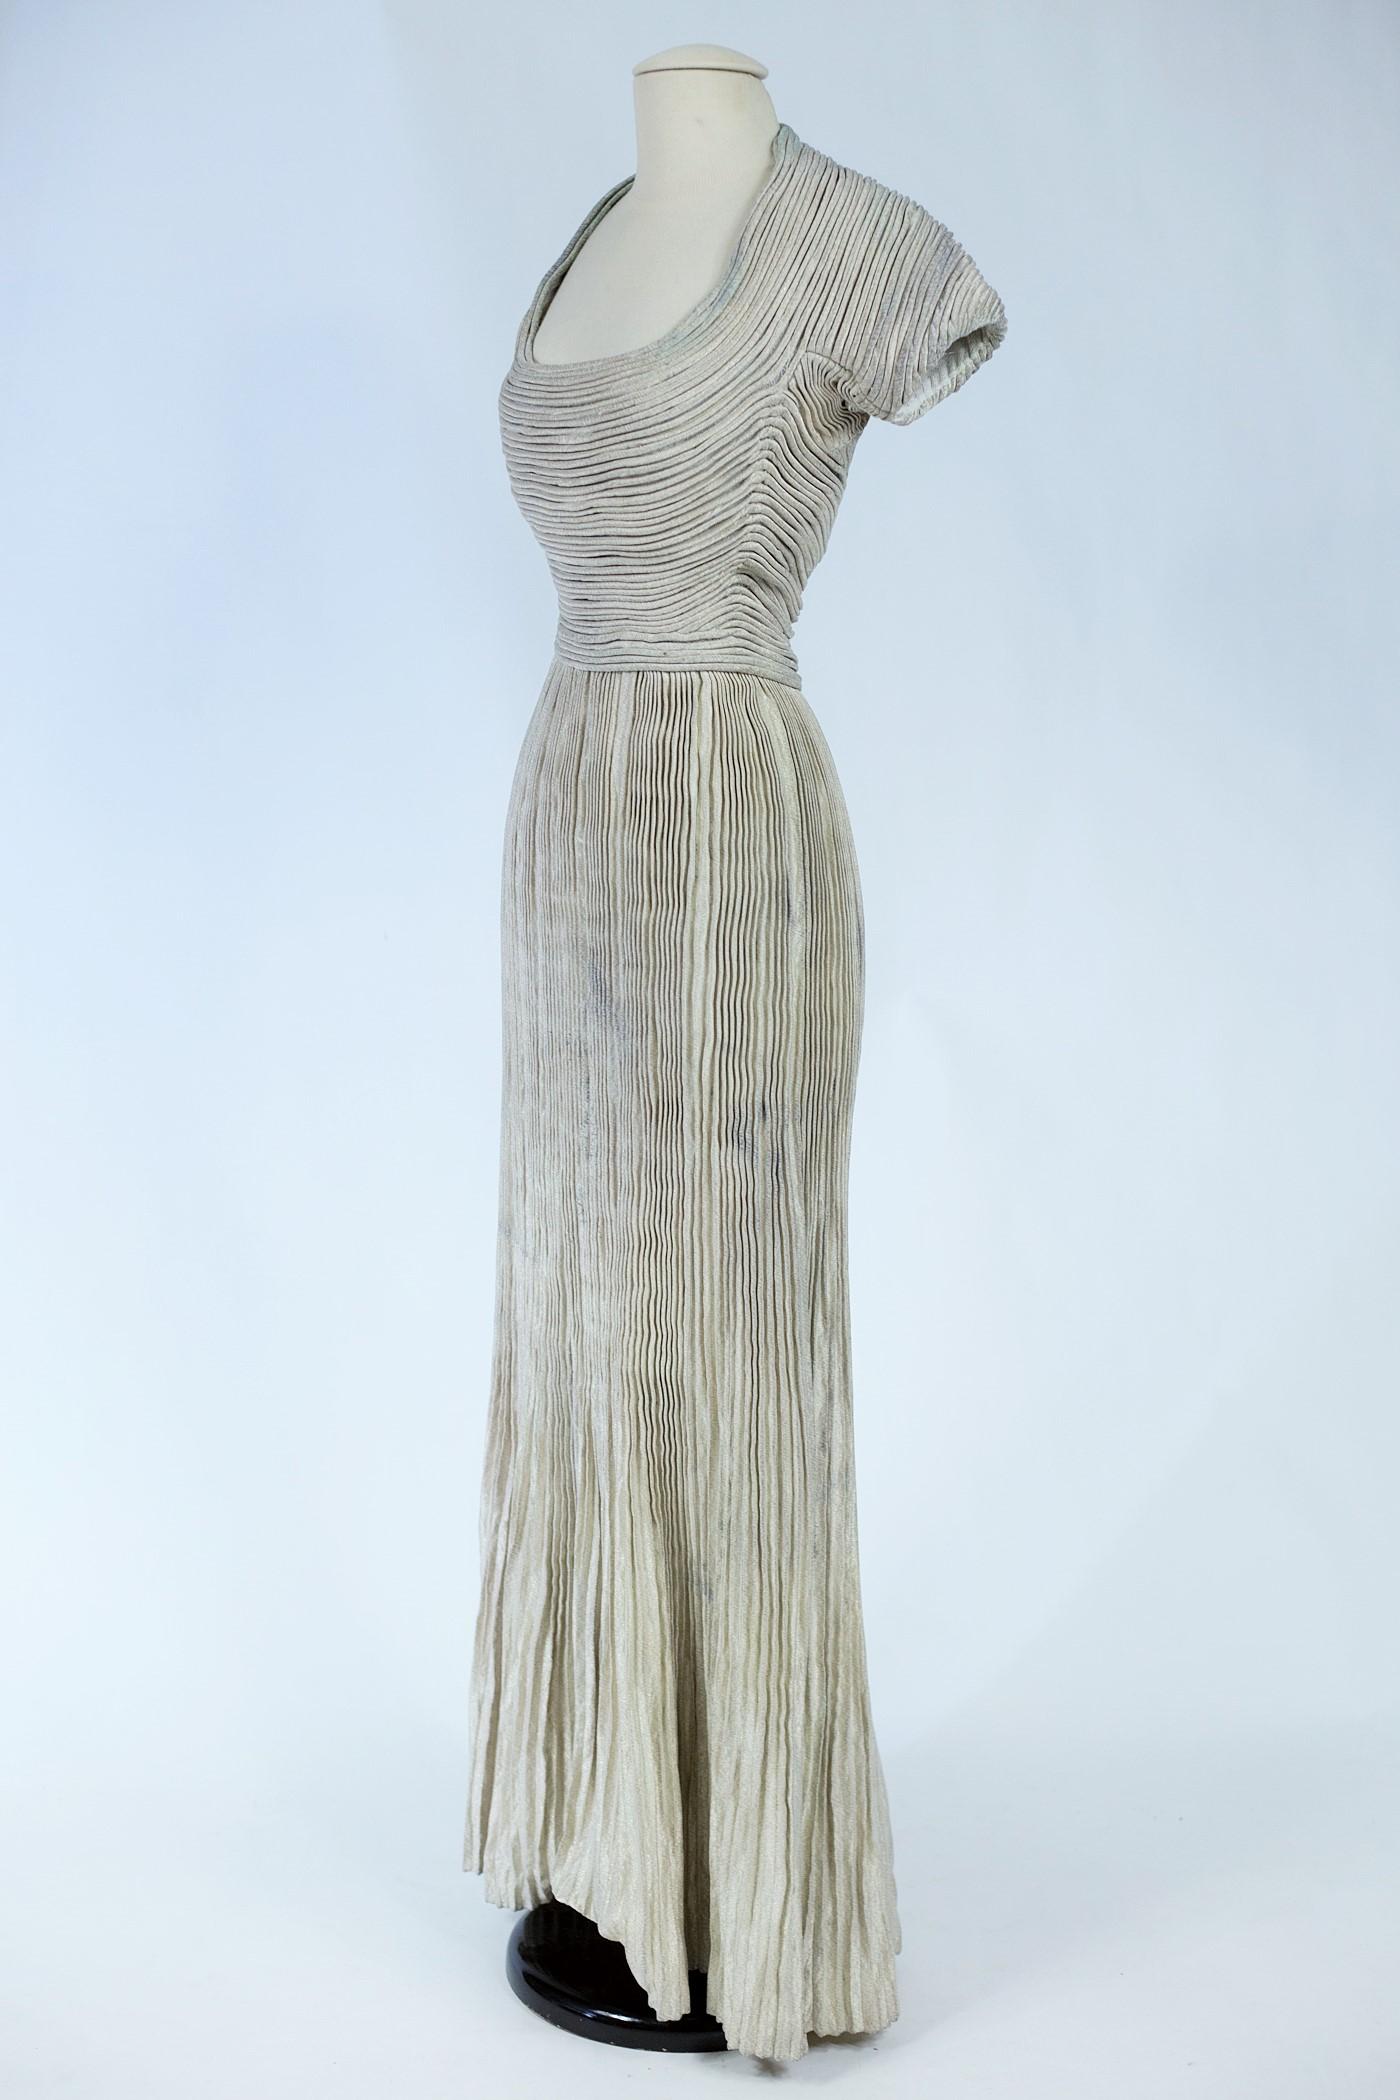 A Silver Lamé Evening Dress by Lucile Manguin - France Haute Couture Circa 1940 For Sale 2